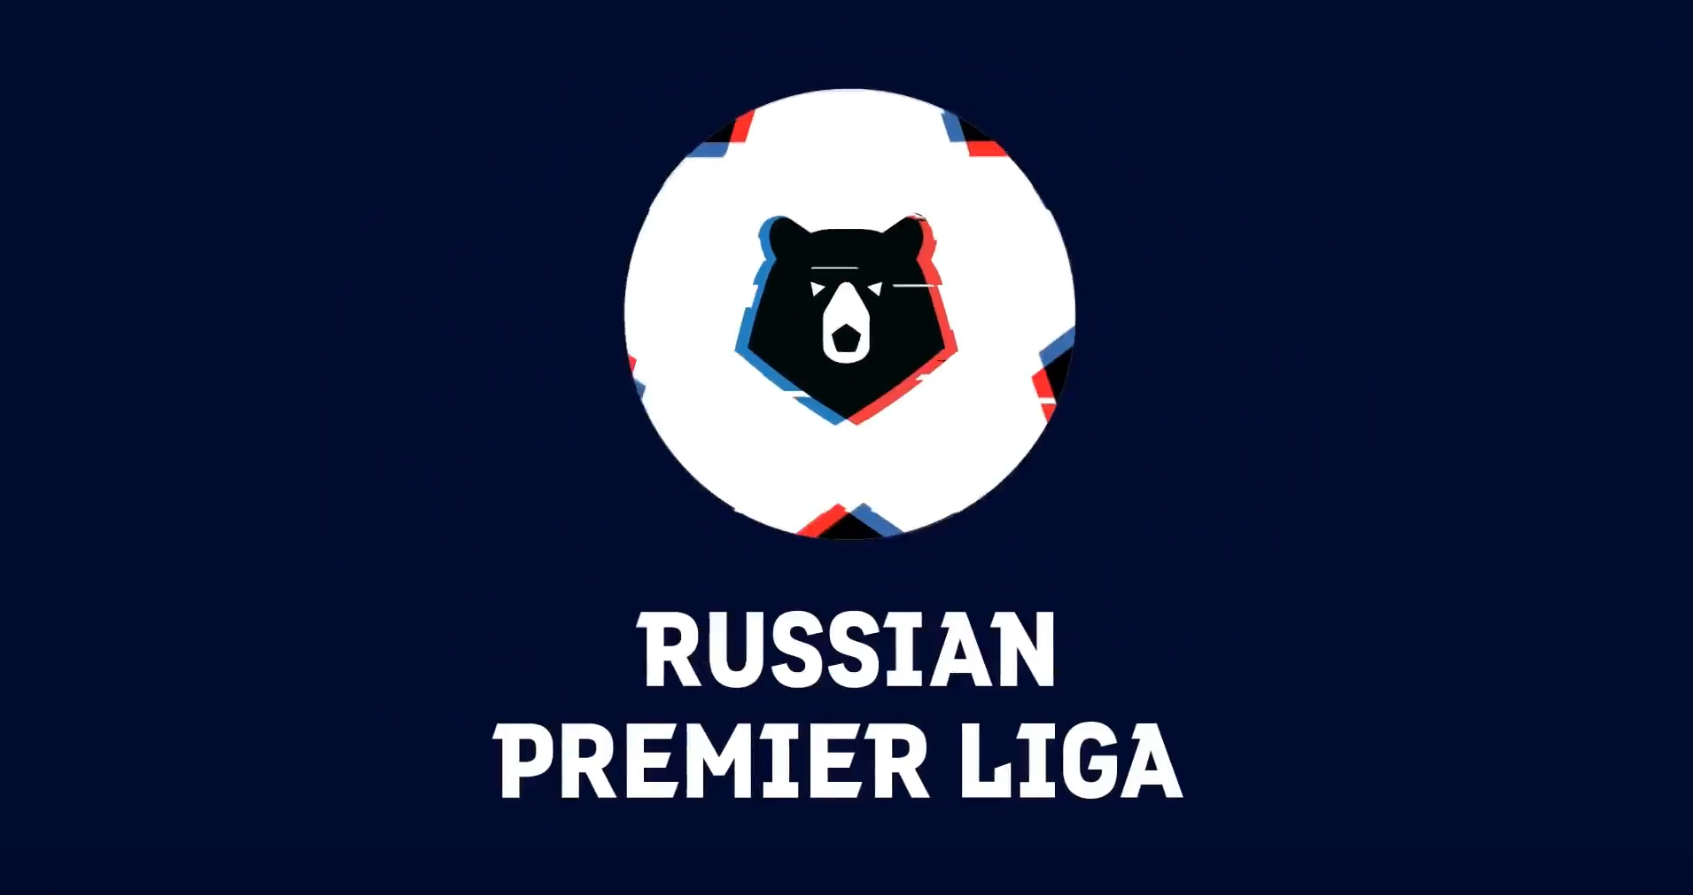 Рпл россия премьер лига. РФПЛ логотип. РПЛ эмблема. Российская премьер лига эмблема. Логотип Российской премьер л ги.